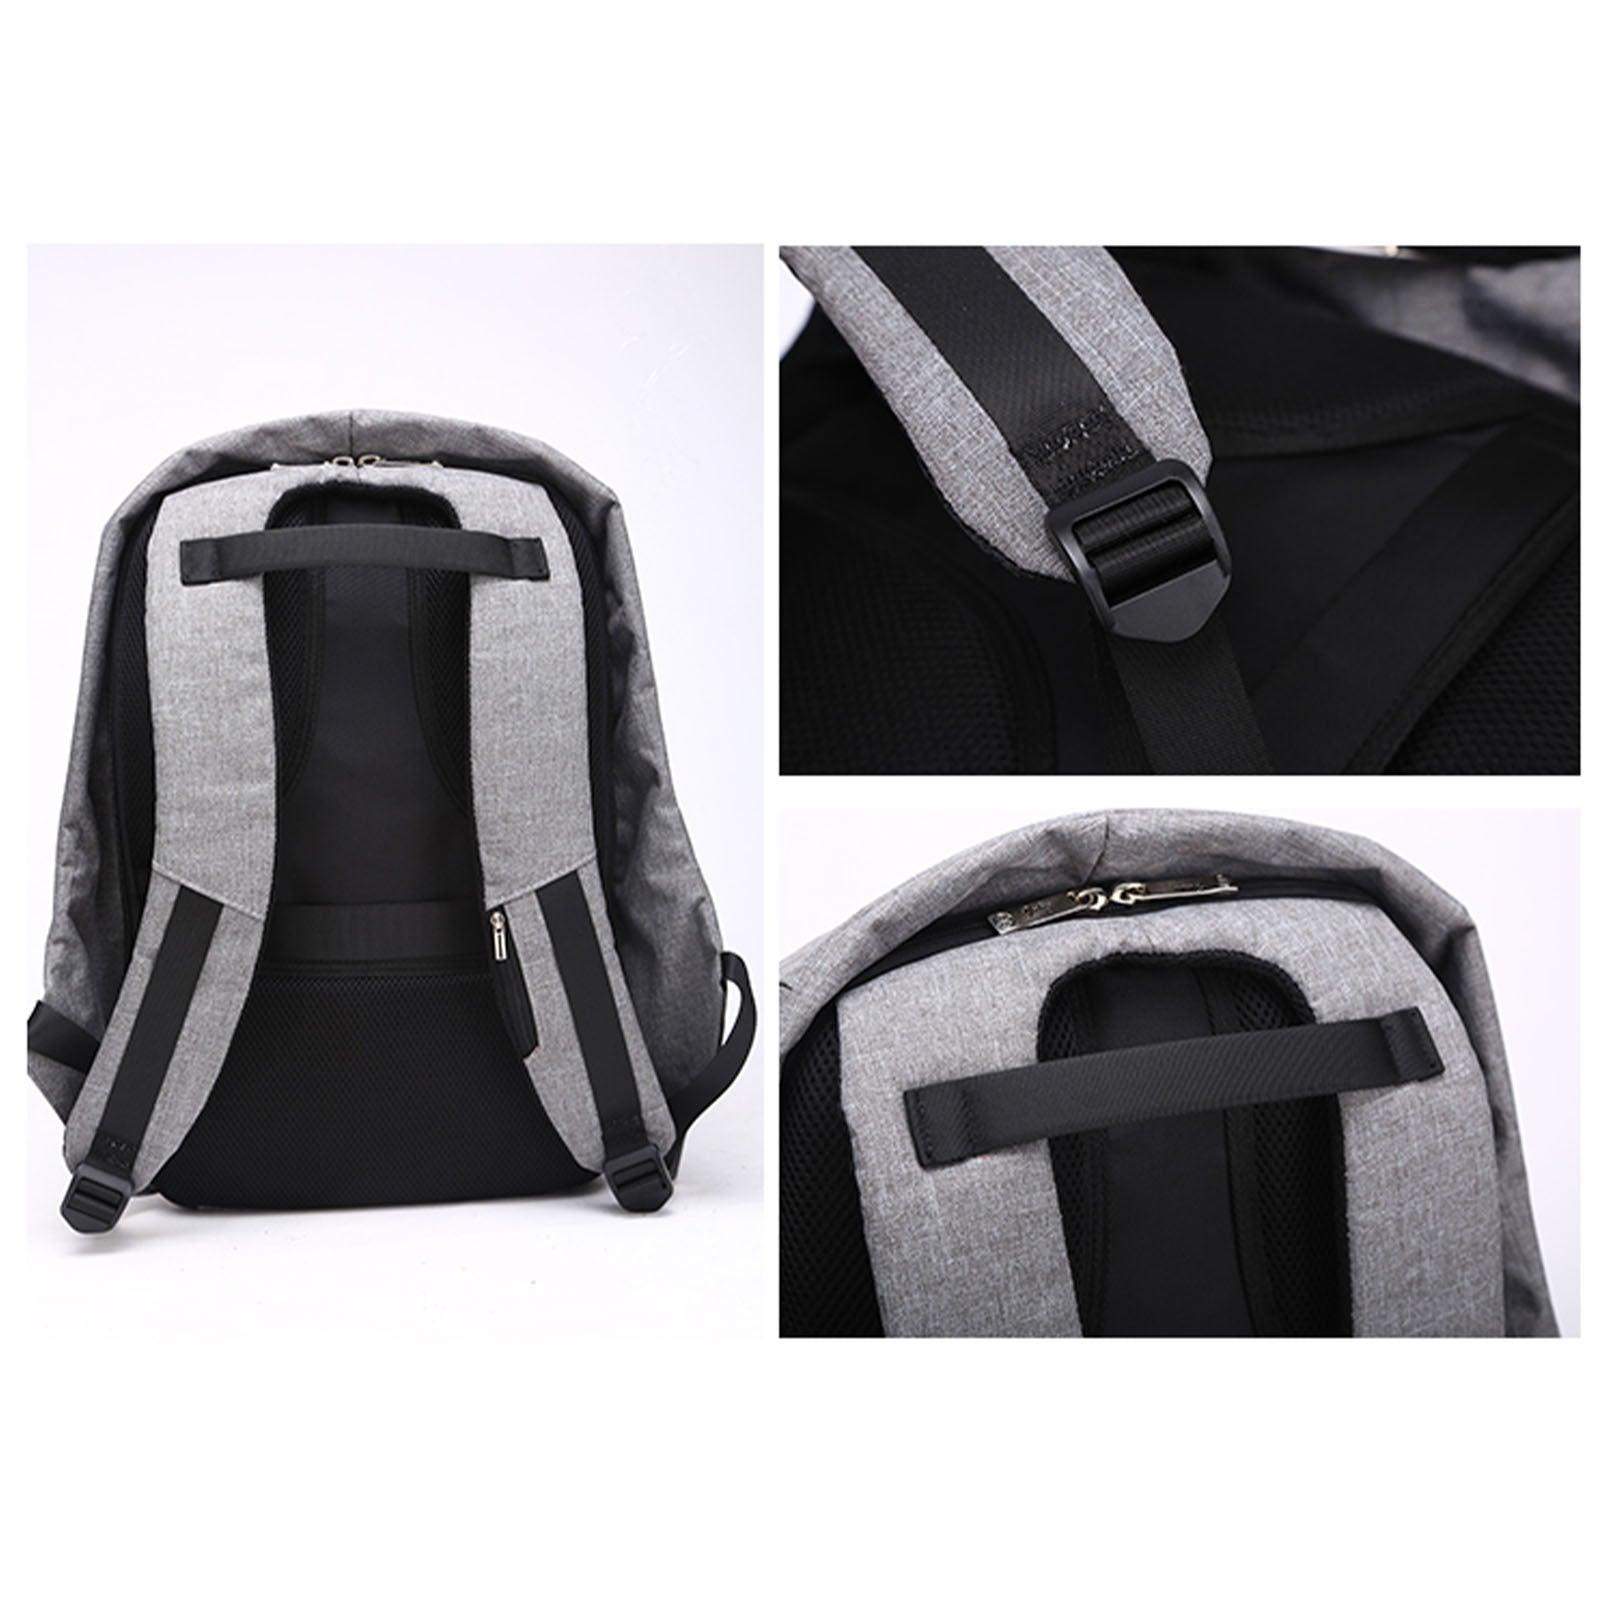 Anti Theft Backpack Waterproof bag School Travel Laptop Bags USB Charging 40 x 31 x 11cm Grey